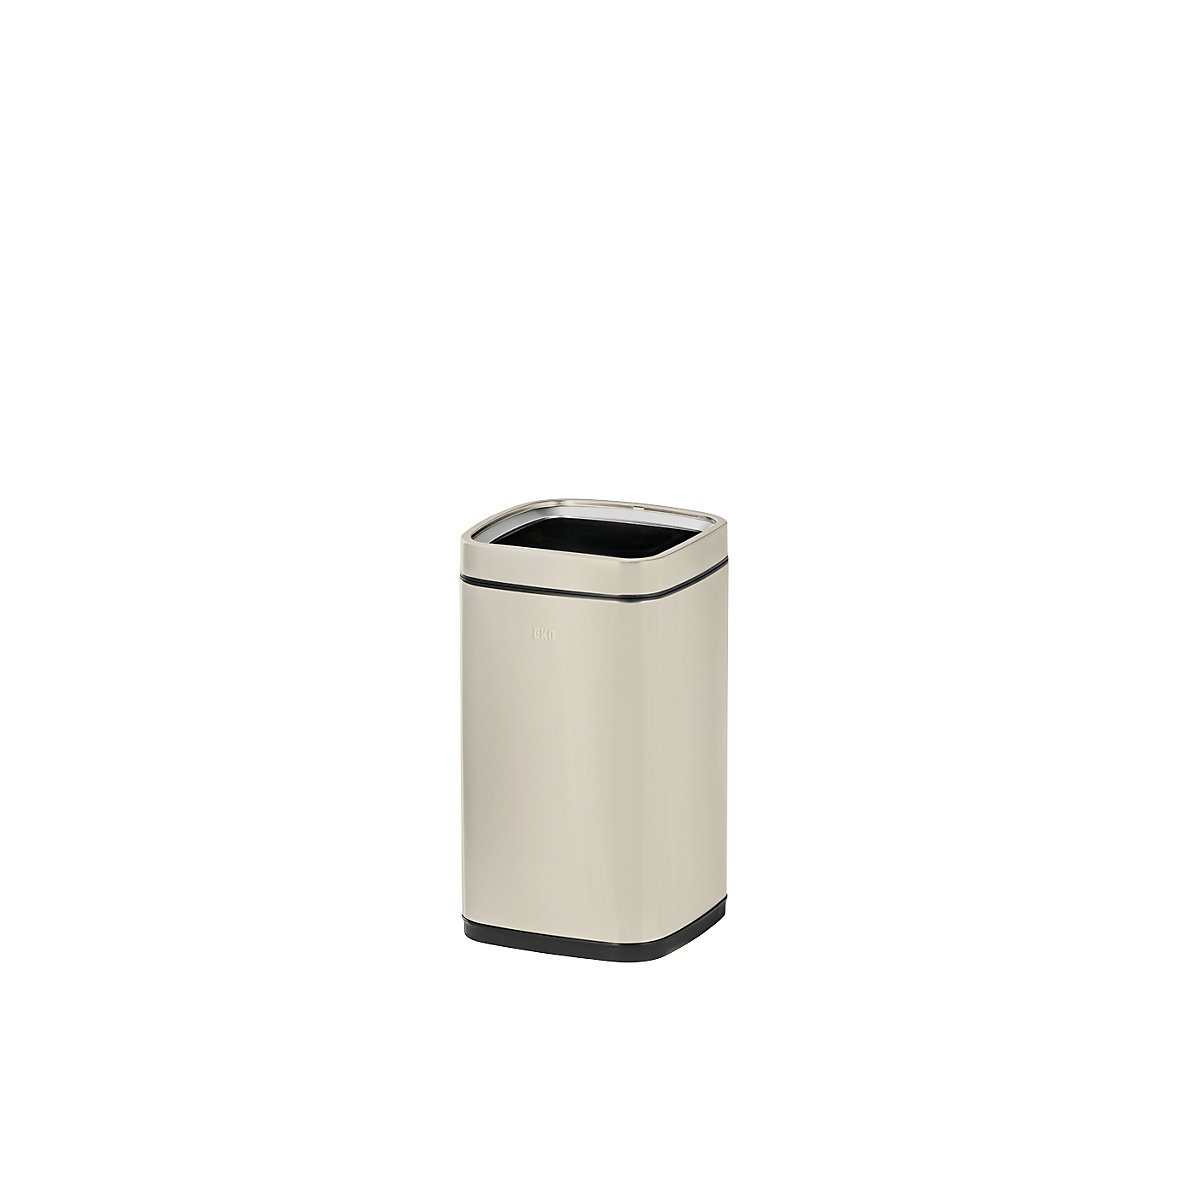 Waste paper bin with inner container – EKO, capacity 12 l, cream-5